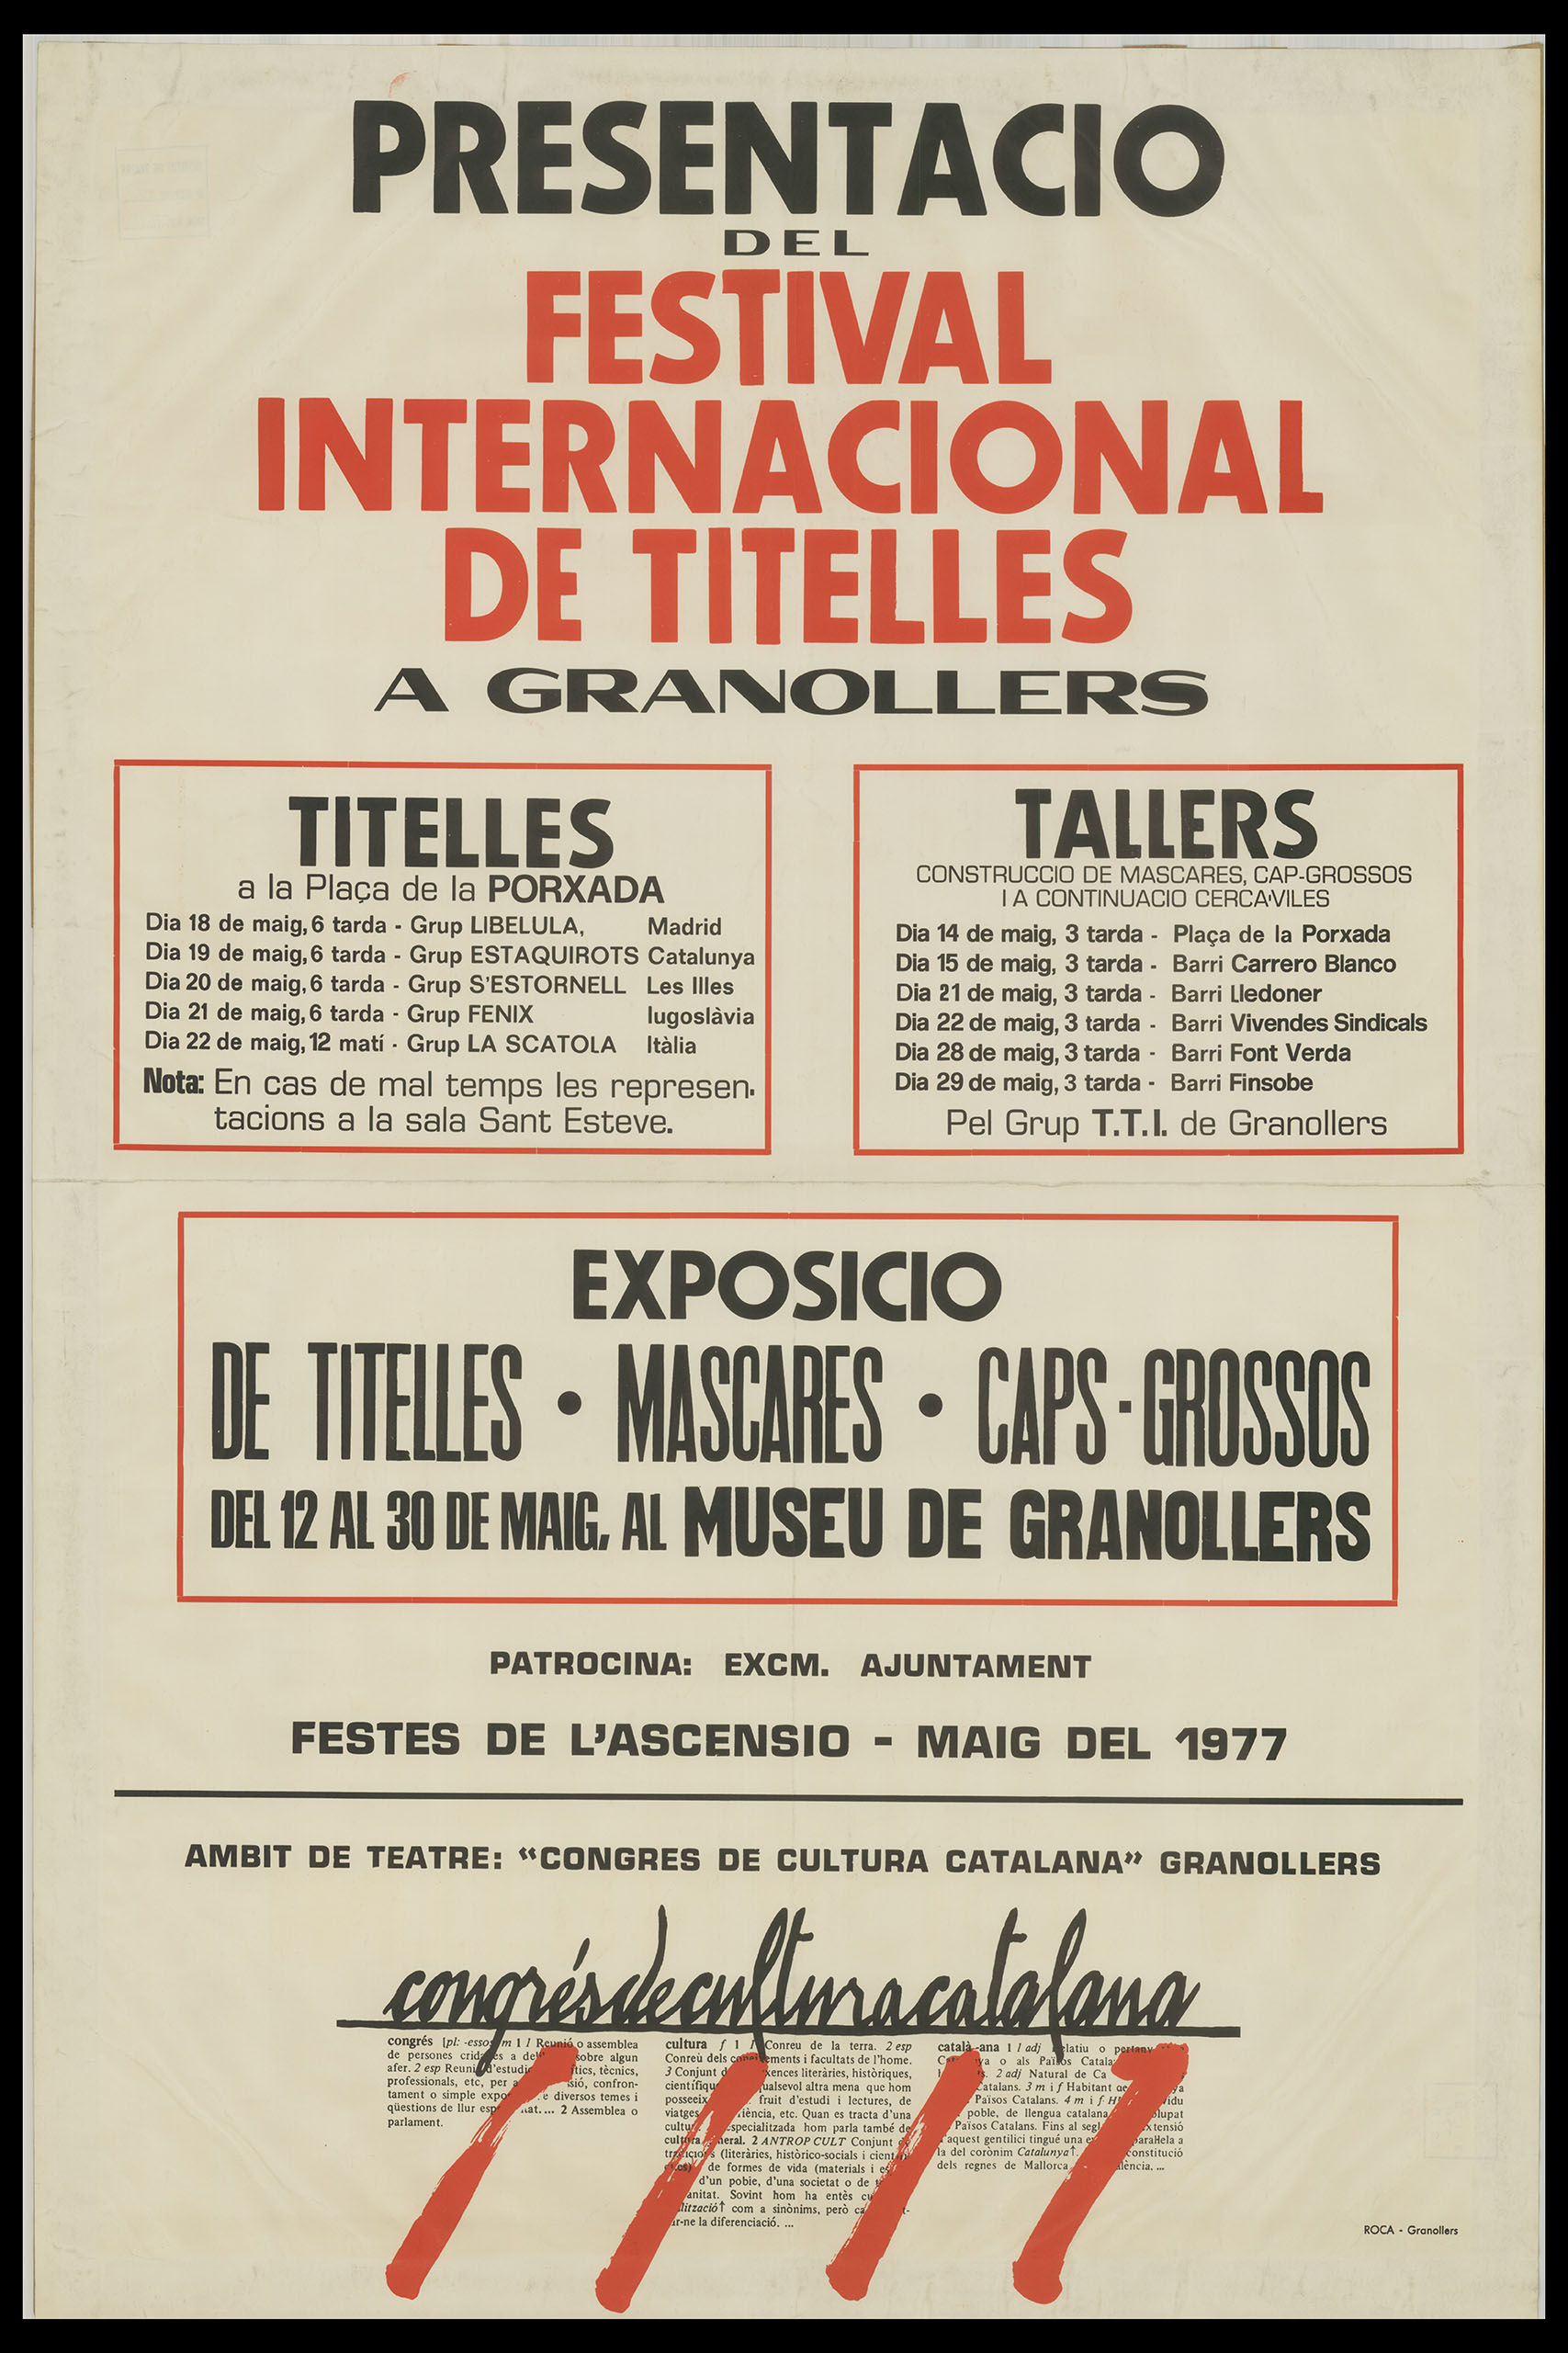 Festival Internacional de Titelles - Granollers (Institut del Teatre)